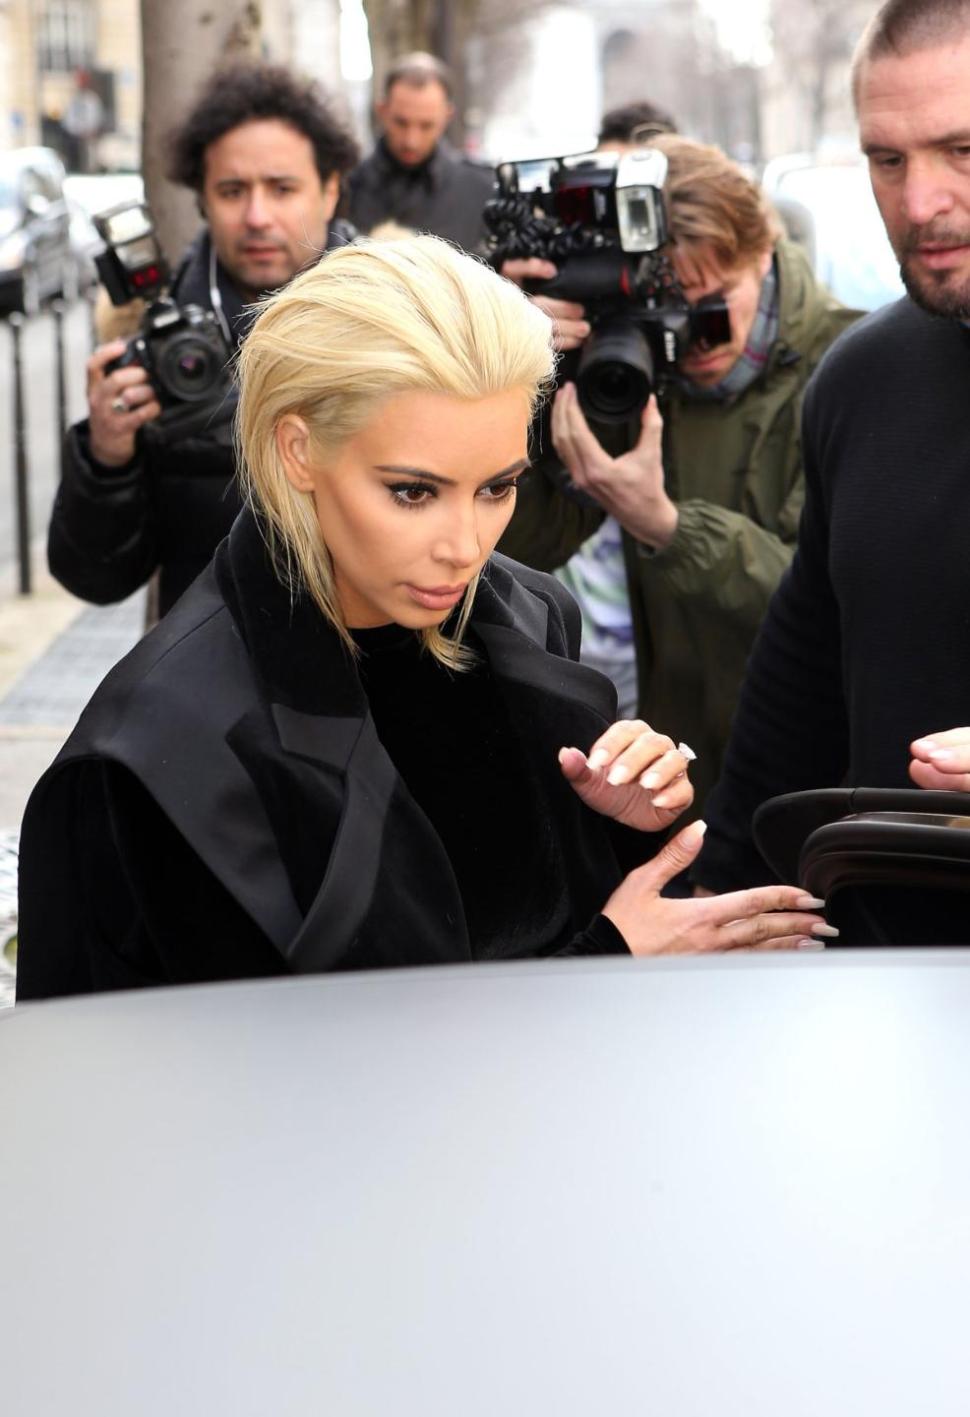 Kim Kardashian has bleached her signature dark hair.